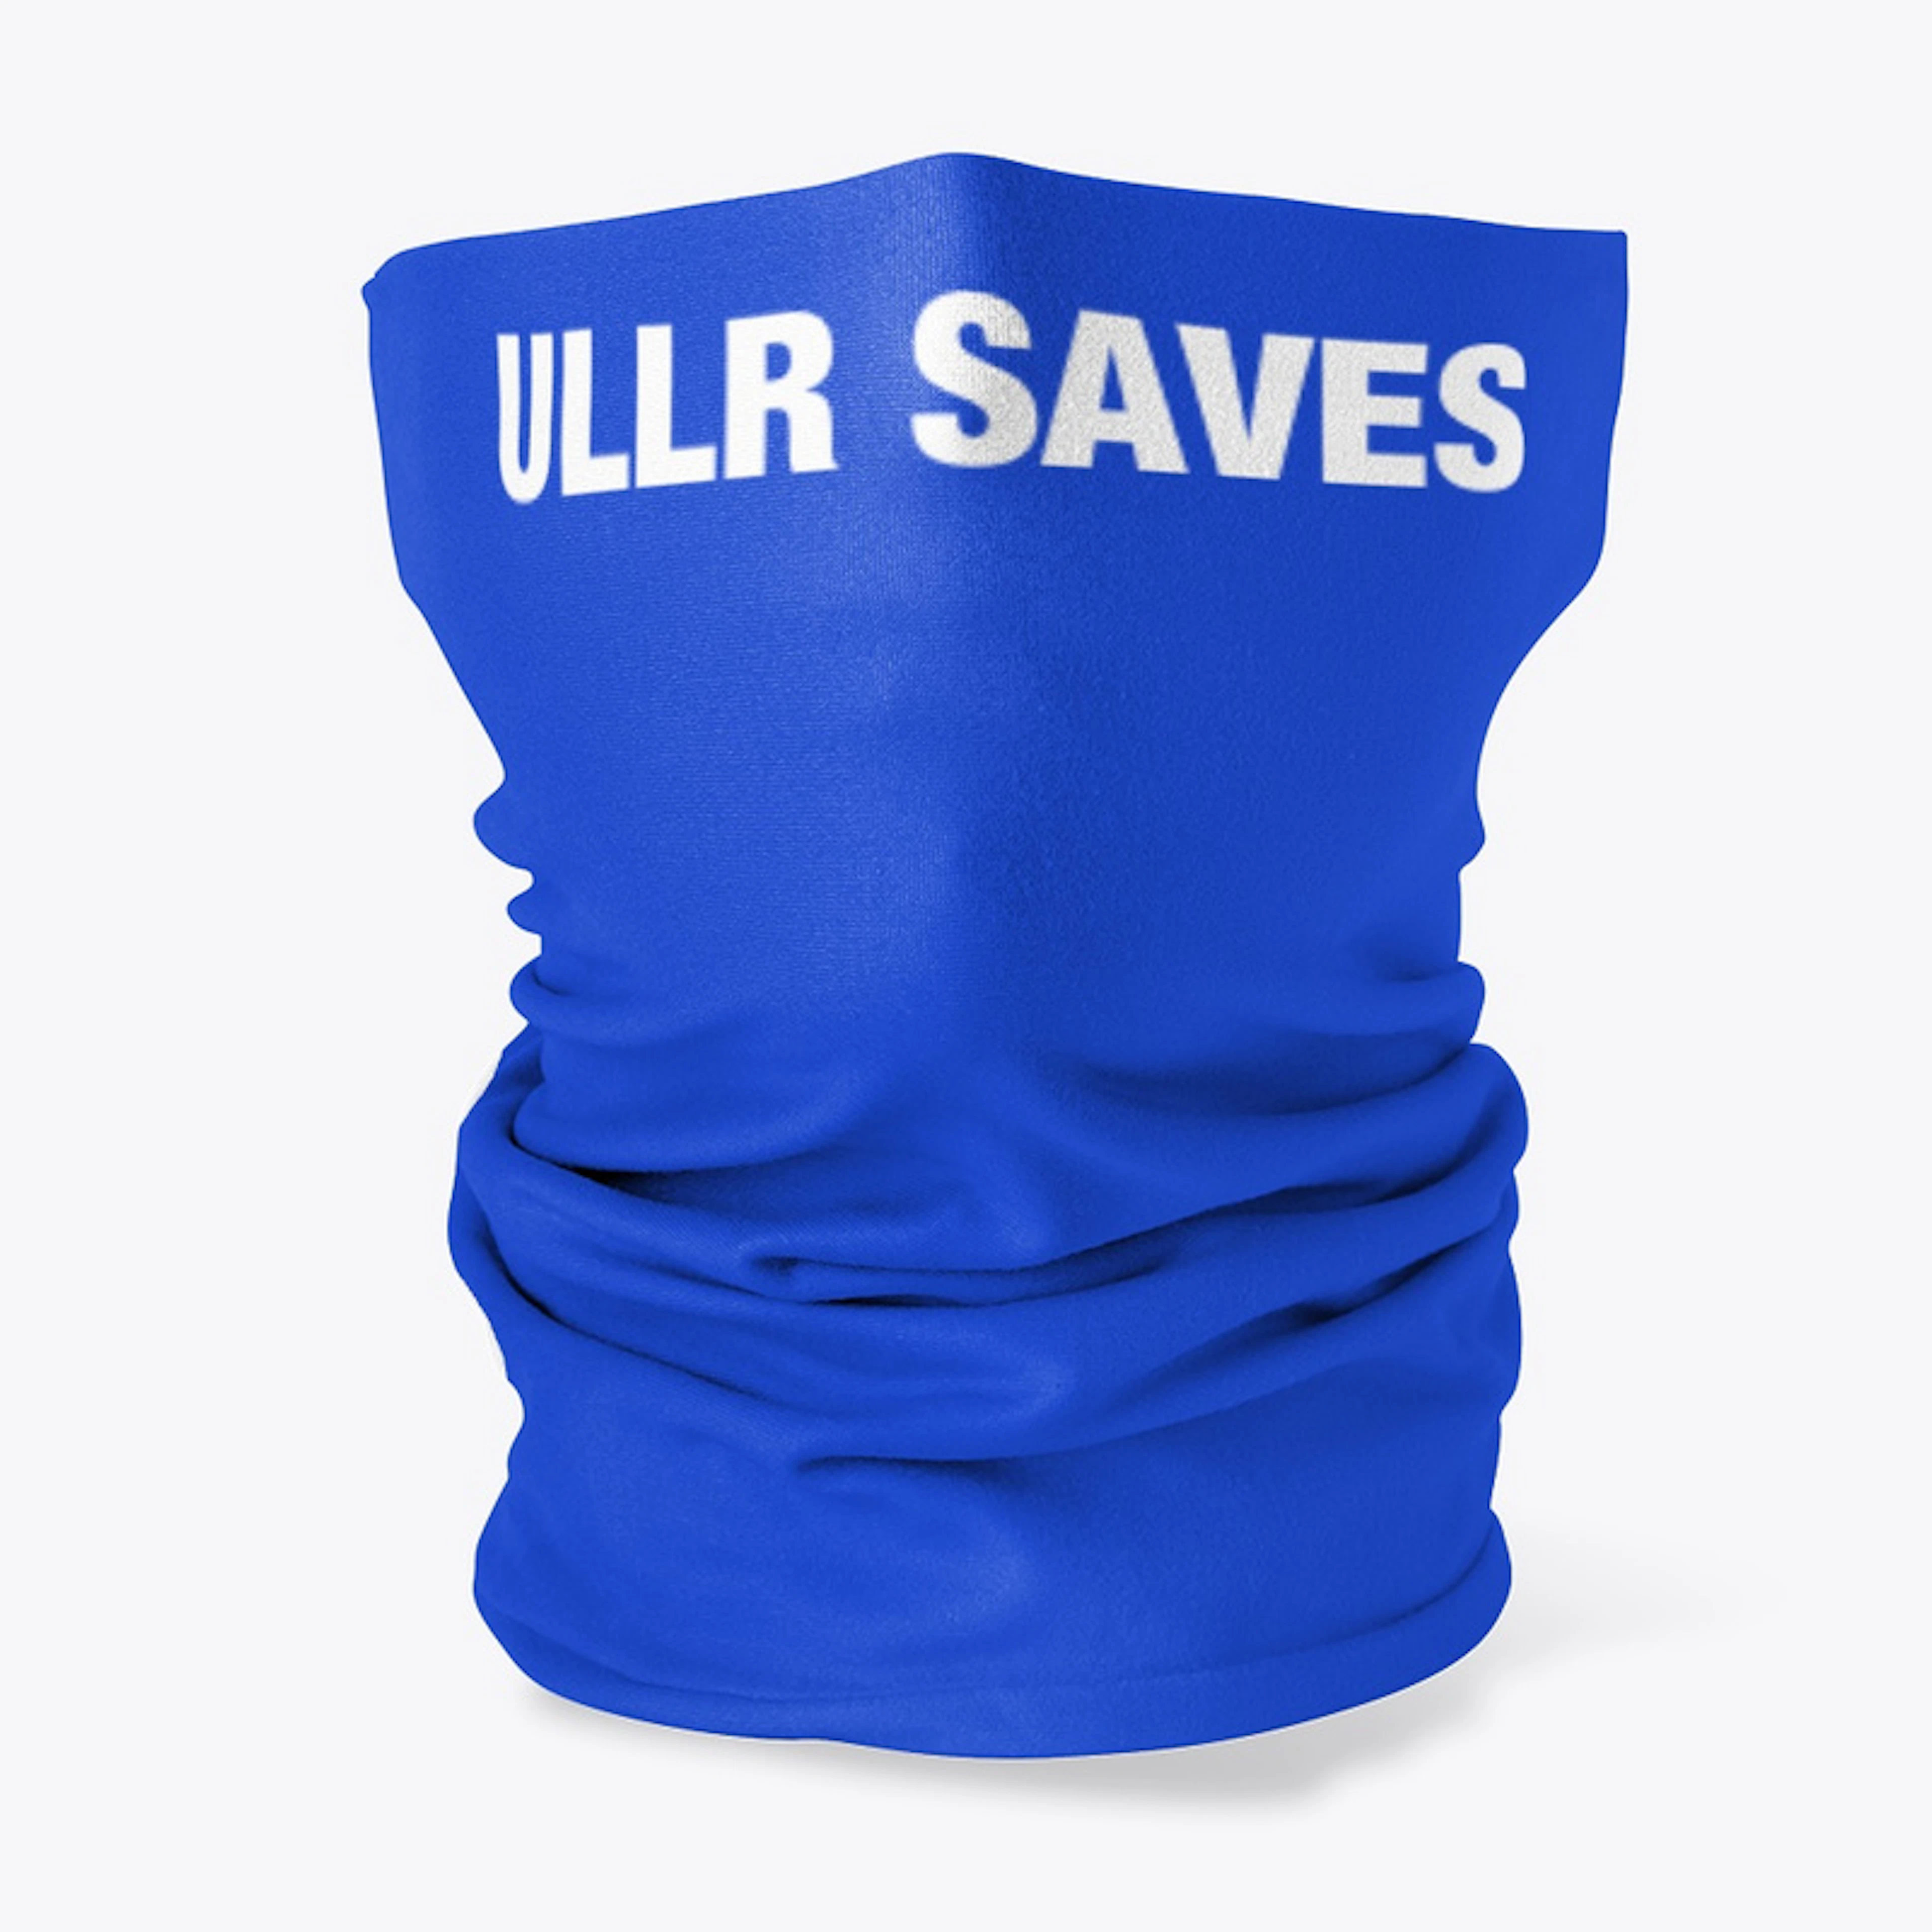 ULLR SAVES accessories line